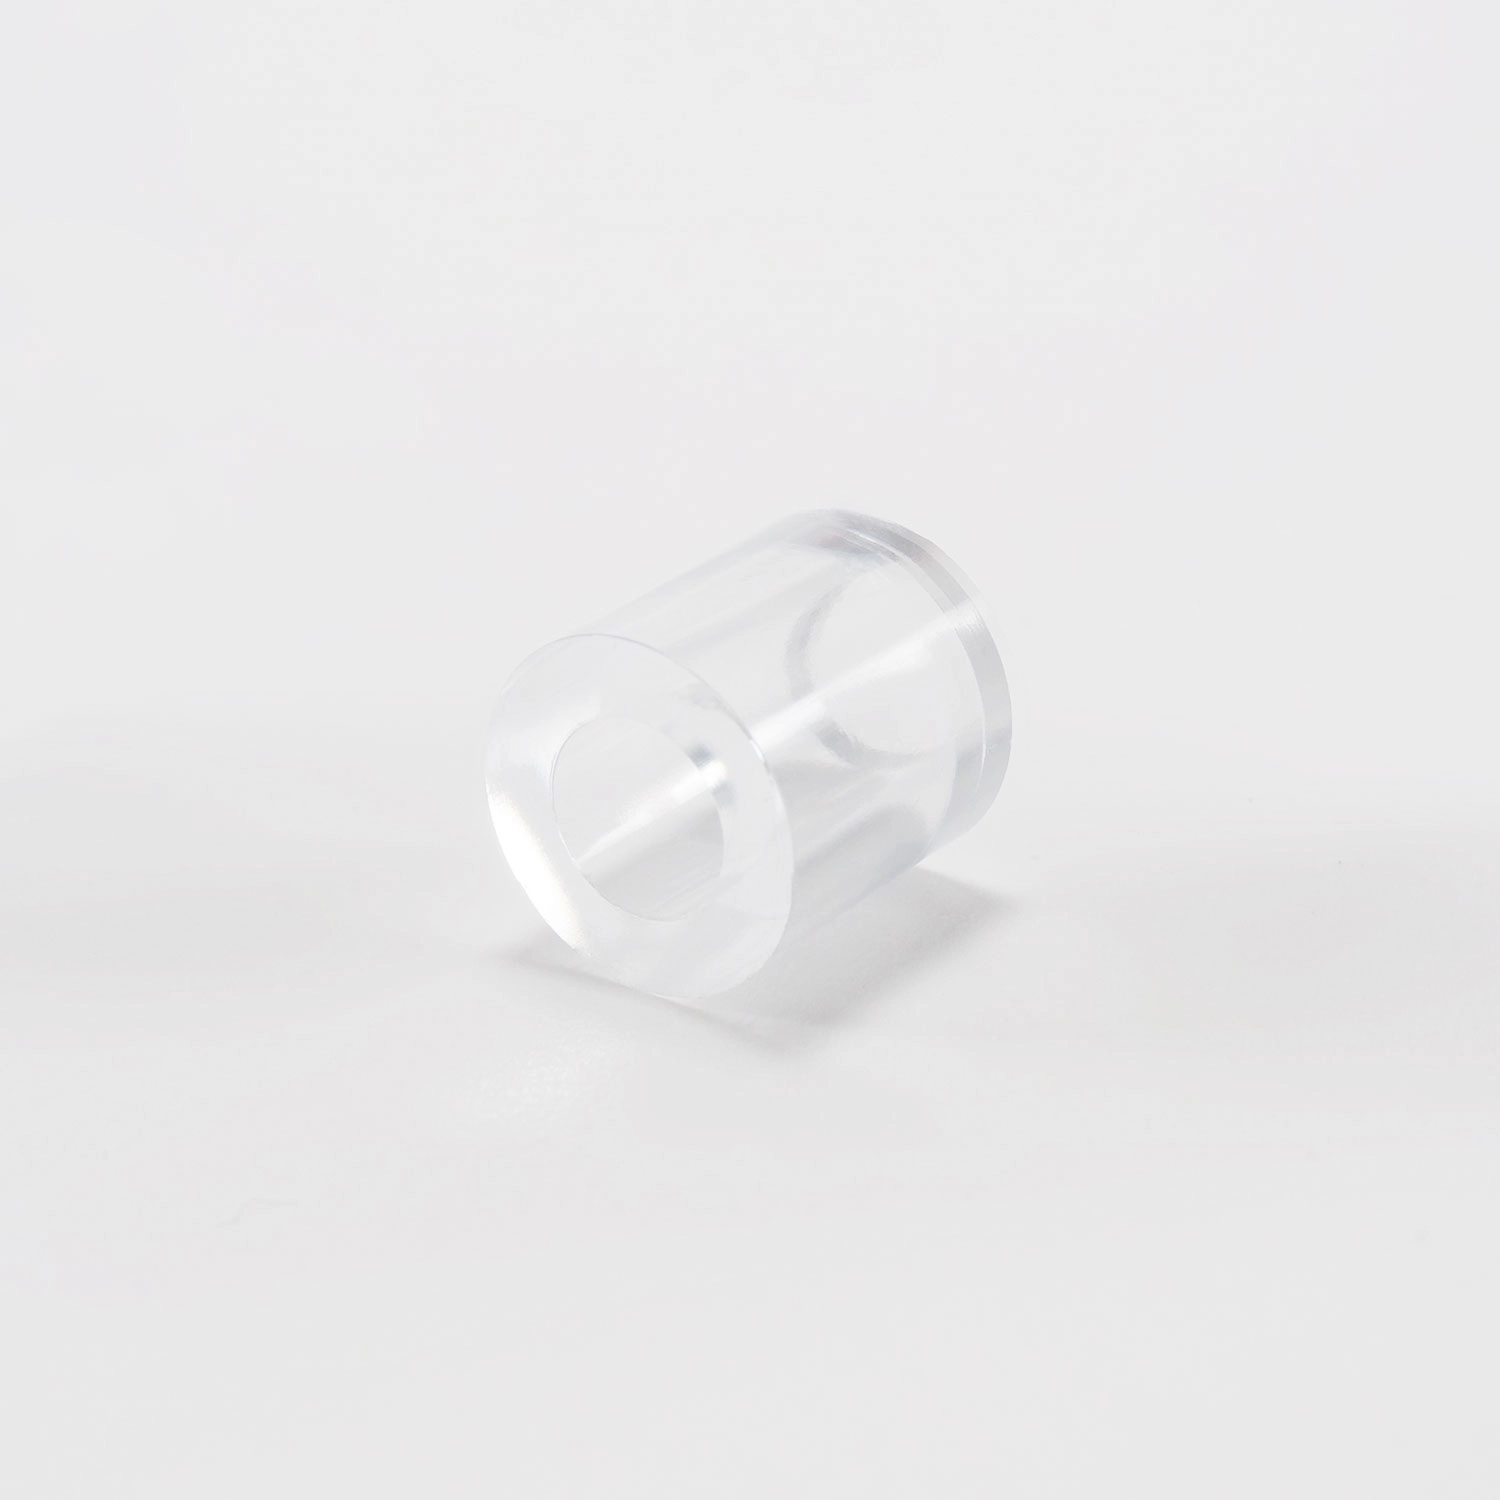 Kunststoff Distanzhülse glasklar in 12mm Länge